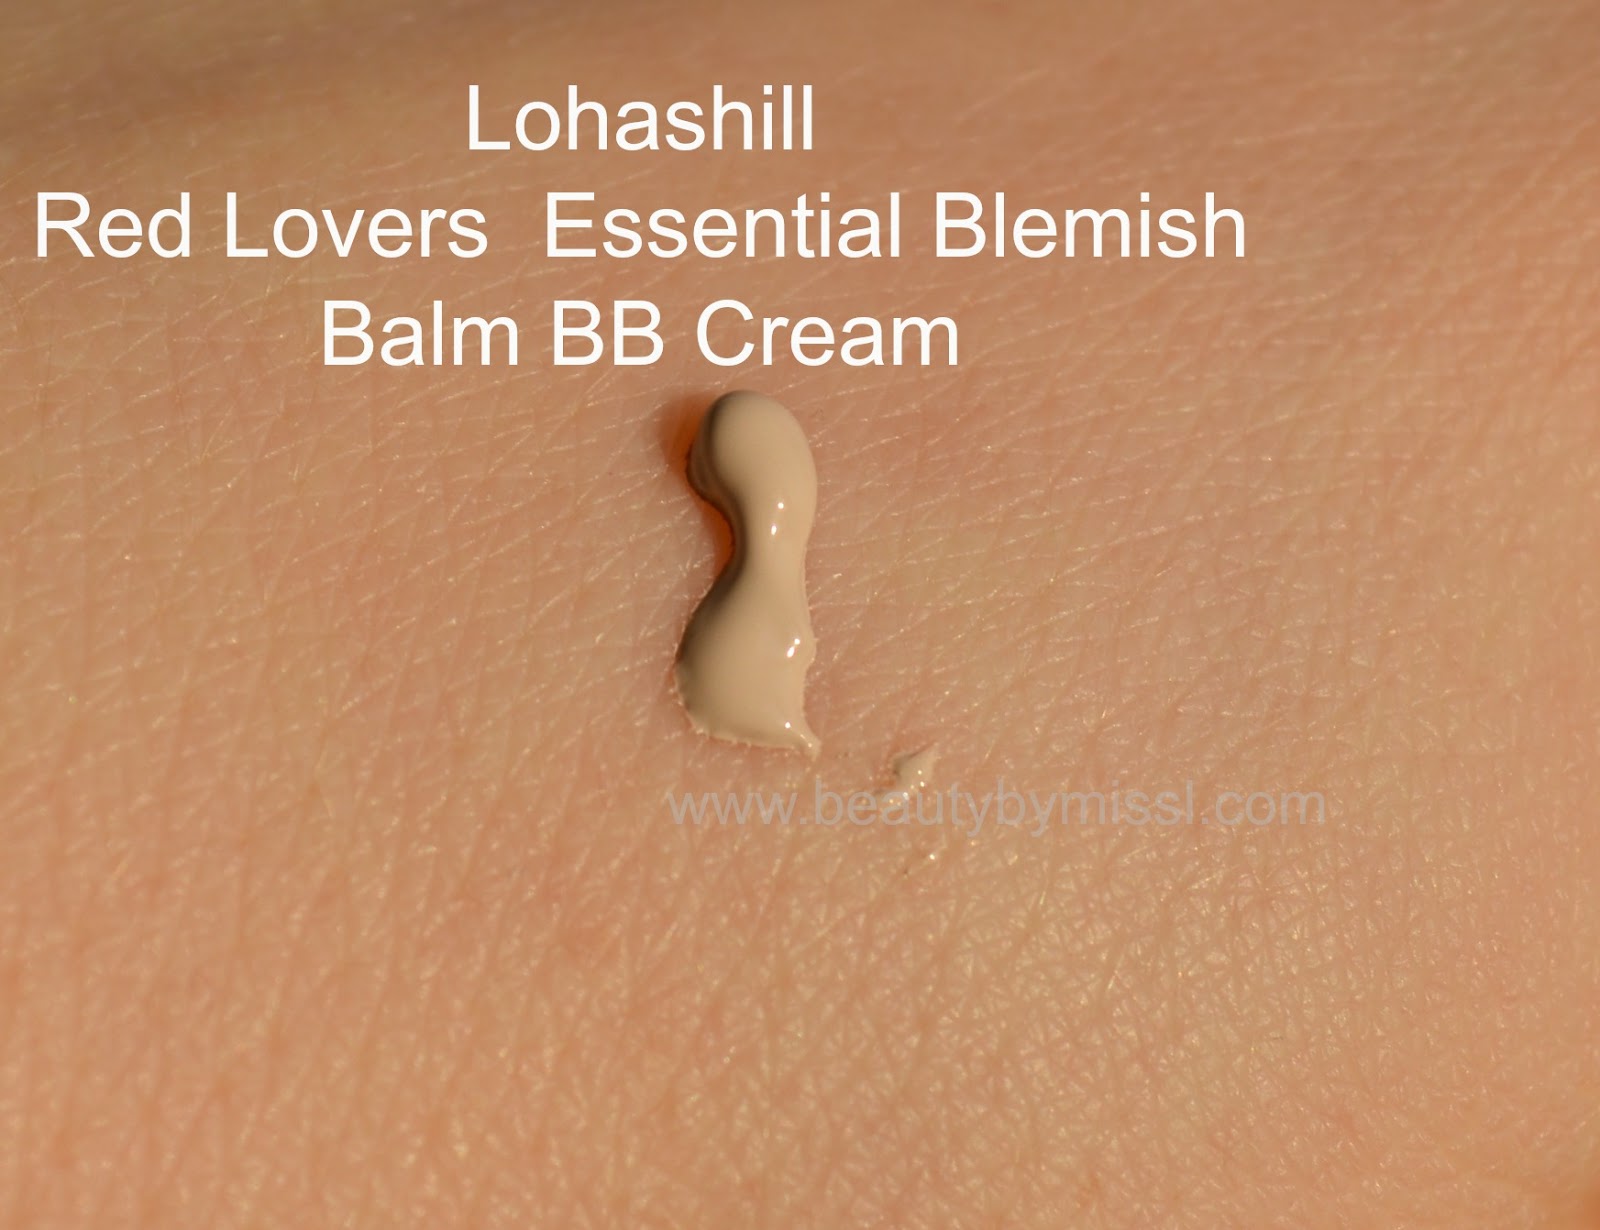 Lohashill Red Lovers Essential Blemish Balm BB Cream. asian bb cream for light and fair skin